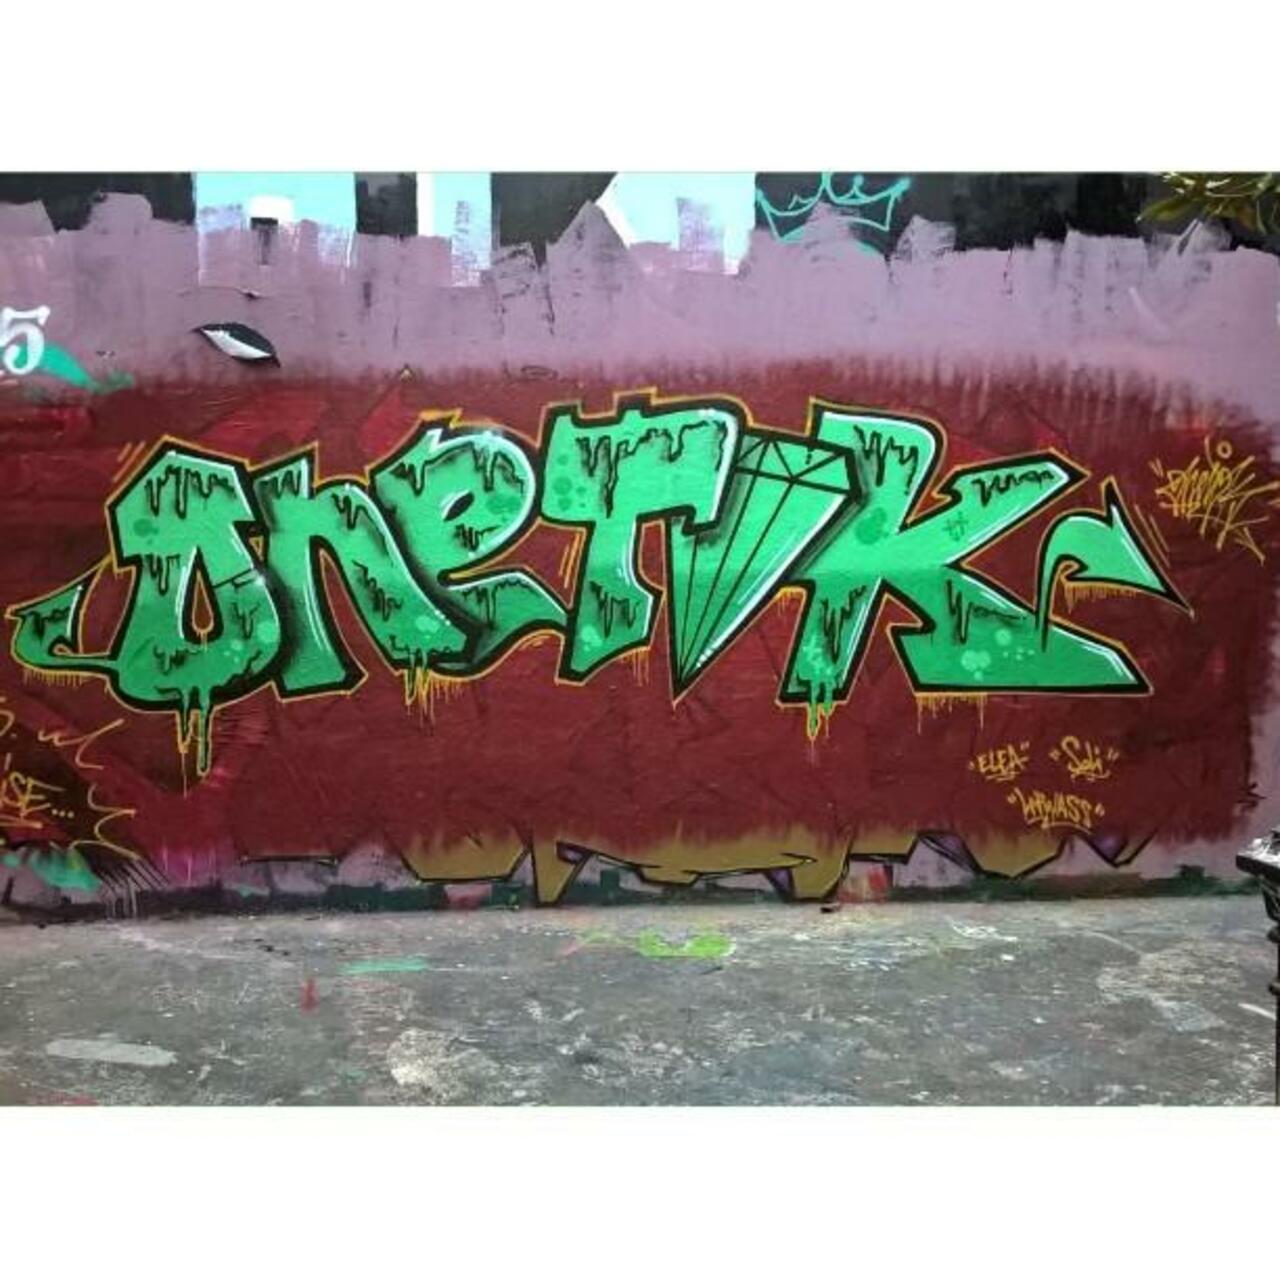 #streetart #graffiti #graff #art #fatcap #bombing #sprayart #spraycanart #wallart #handstyle #lettering #urbanart #… http://t.co/b512sgqe5U